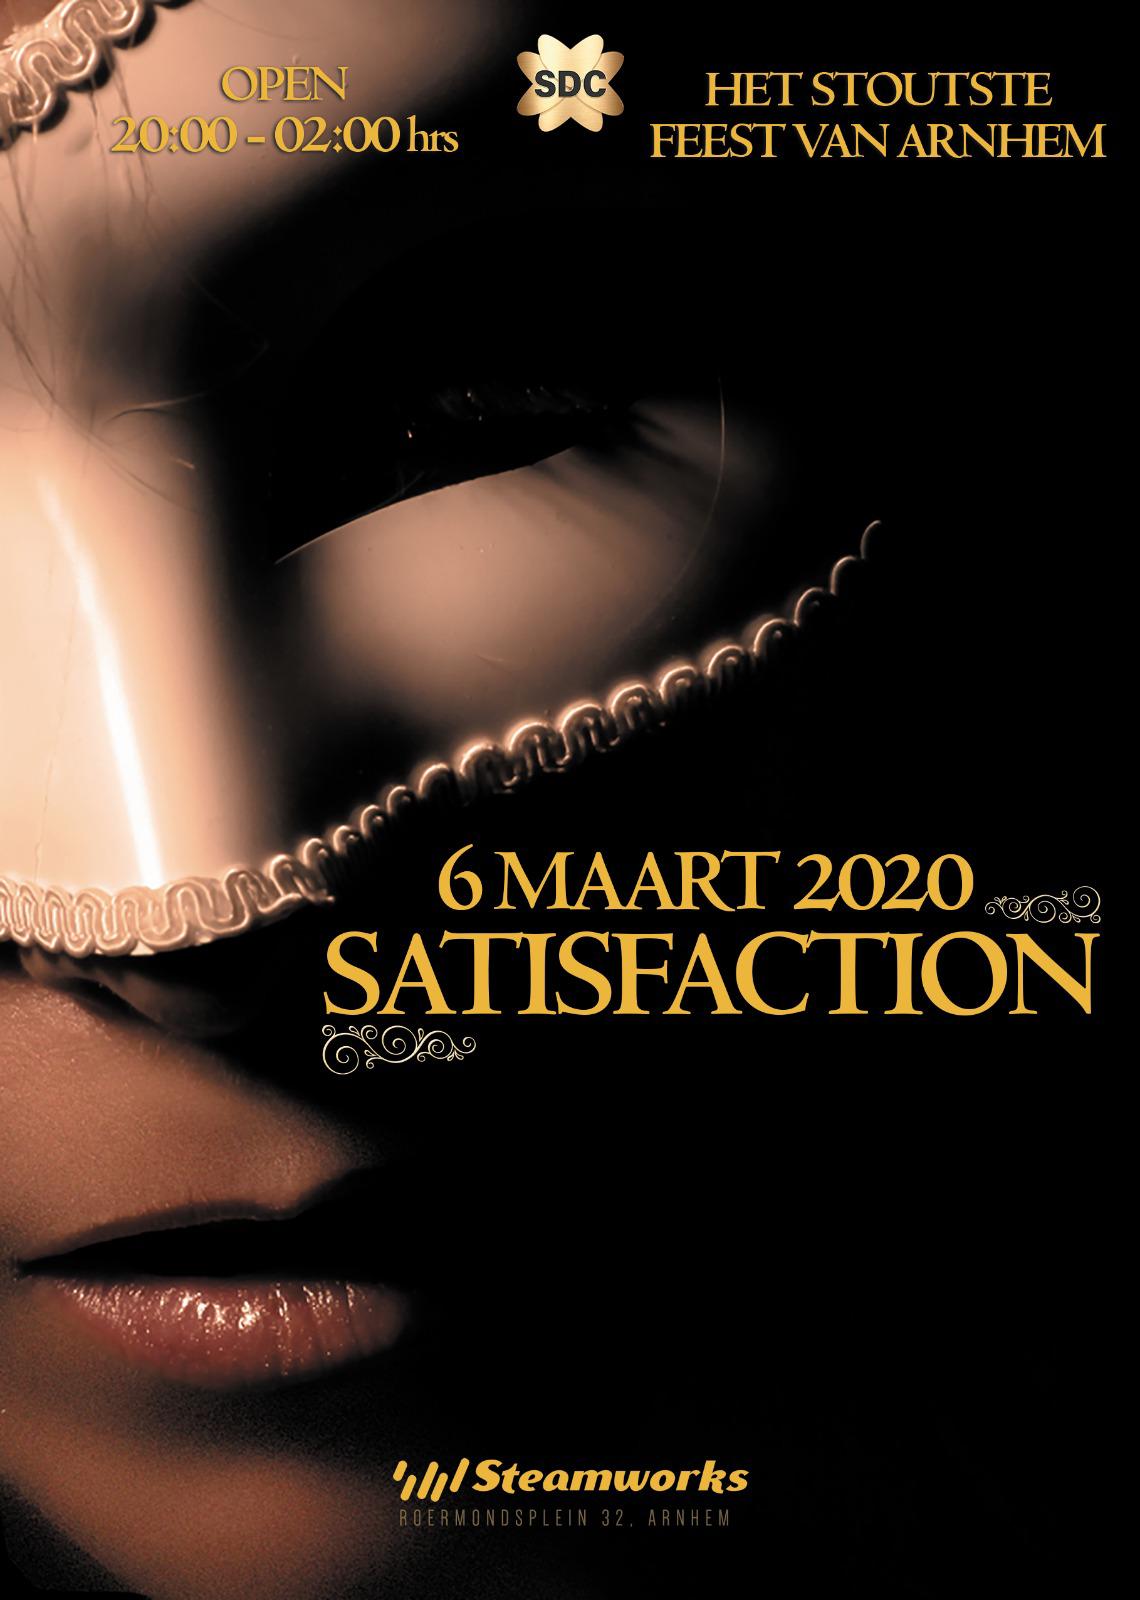 Satisfaction party arnhem 2020